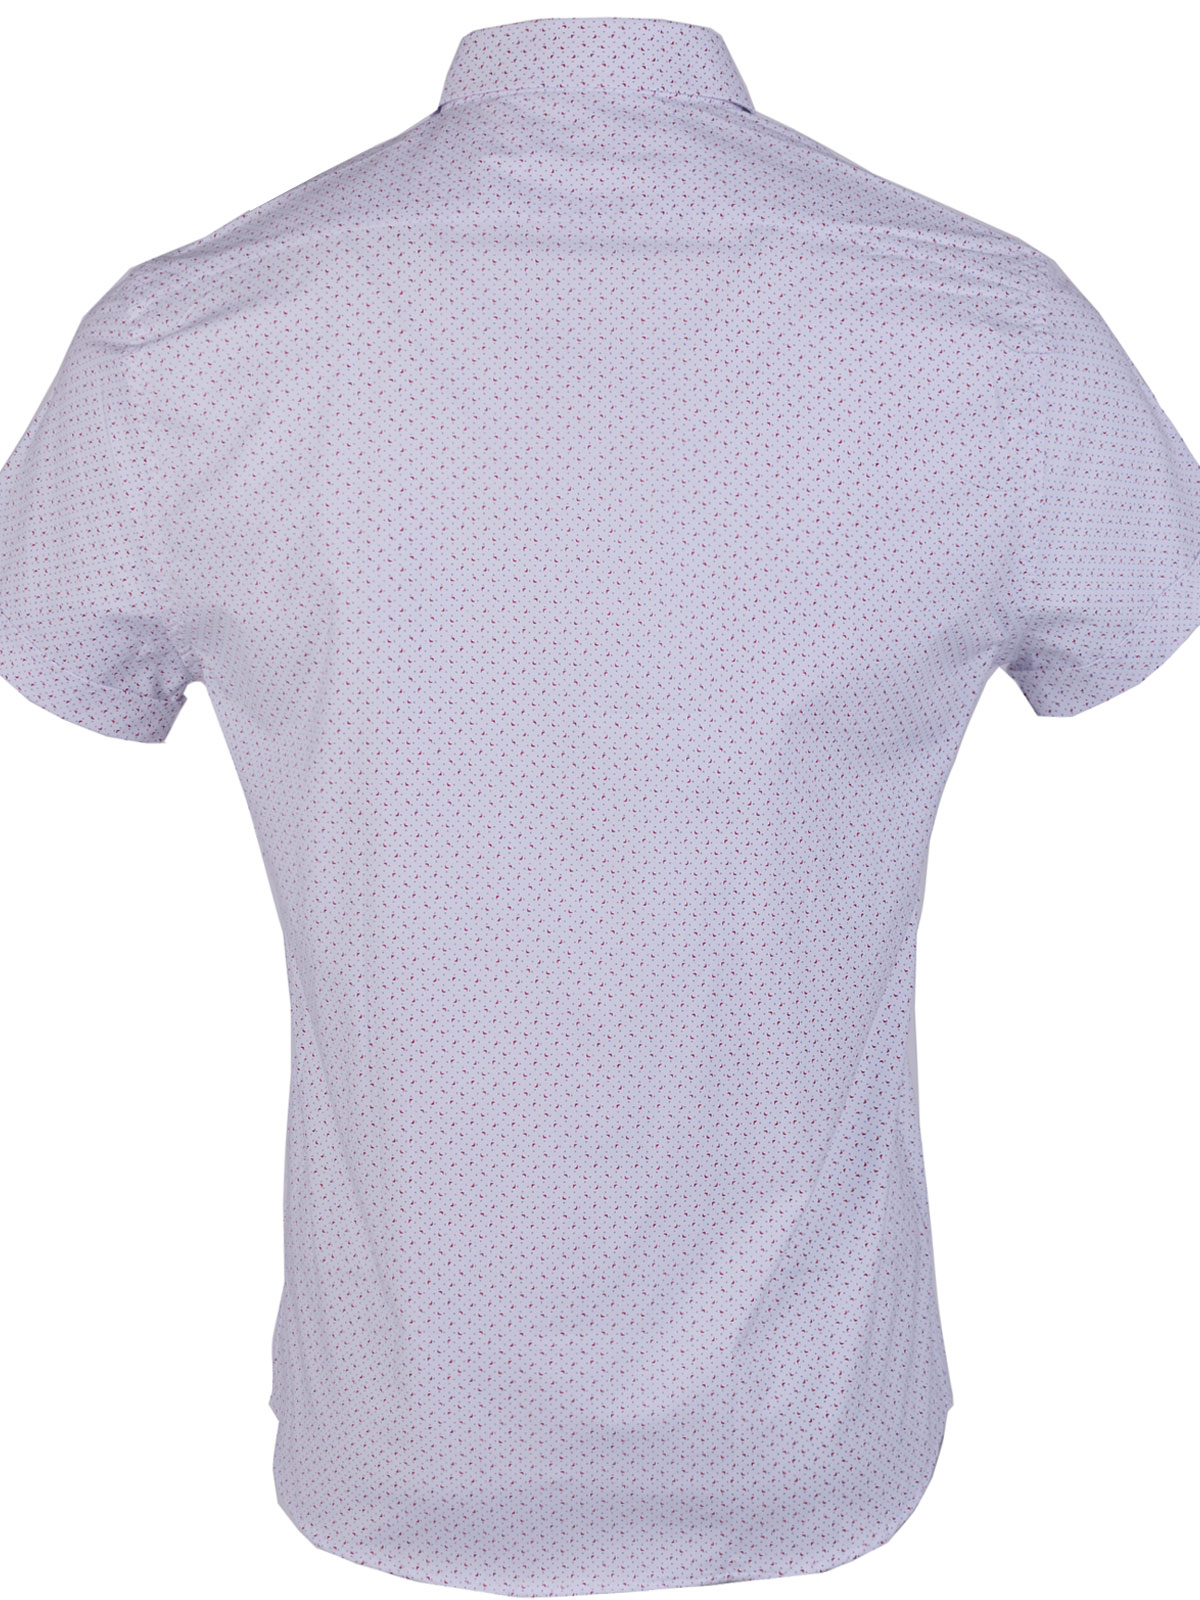 White shirt with figure print - 80230 € 38.81 img2